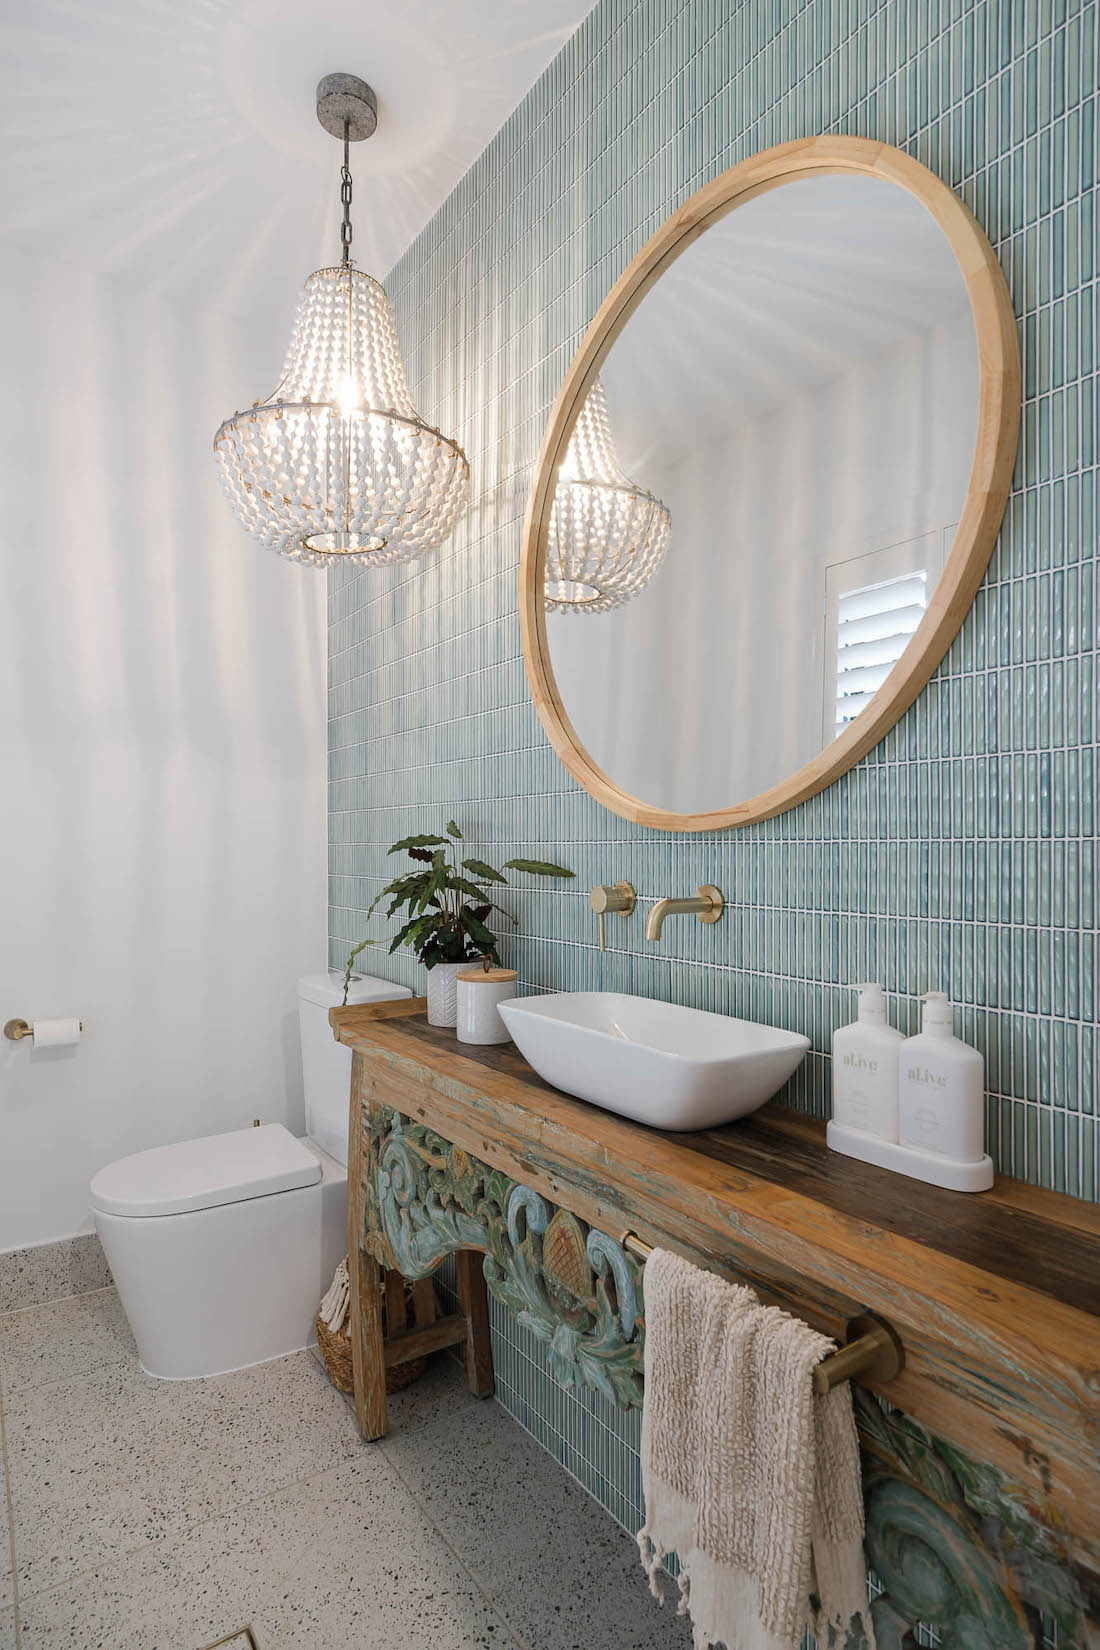 Balinese vanity in bathroom with blue tiled wall